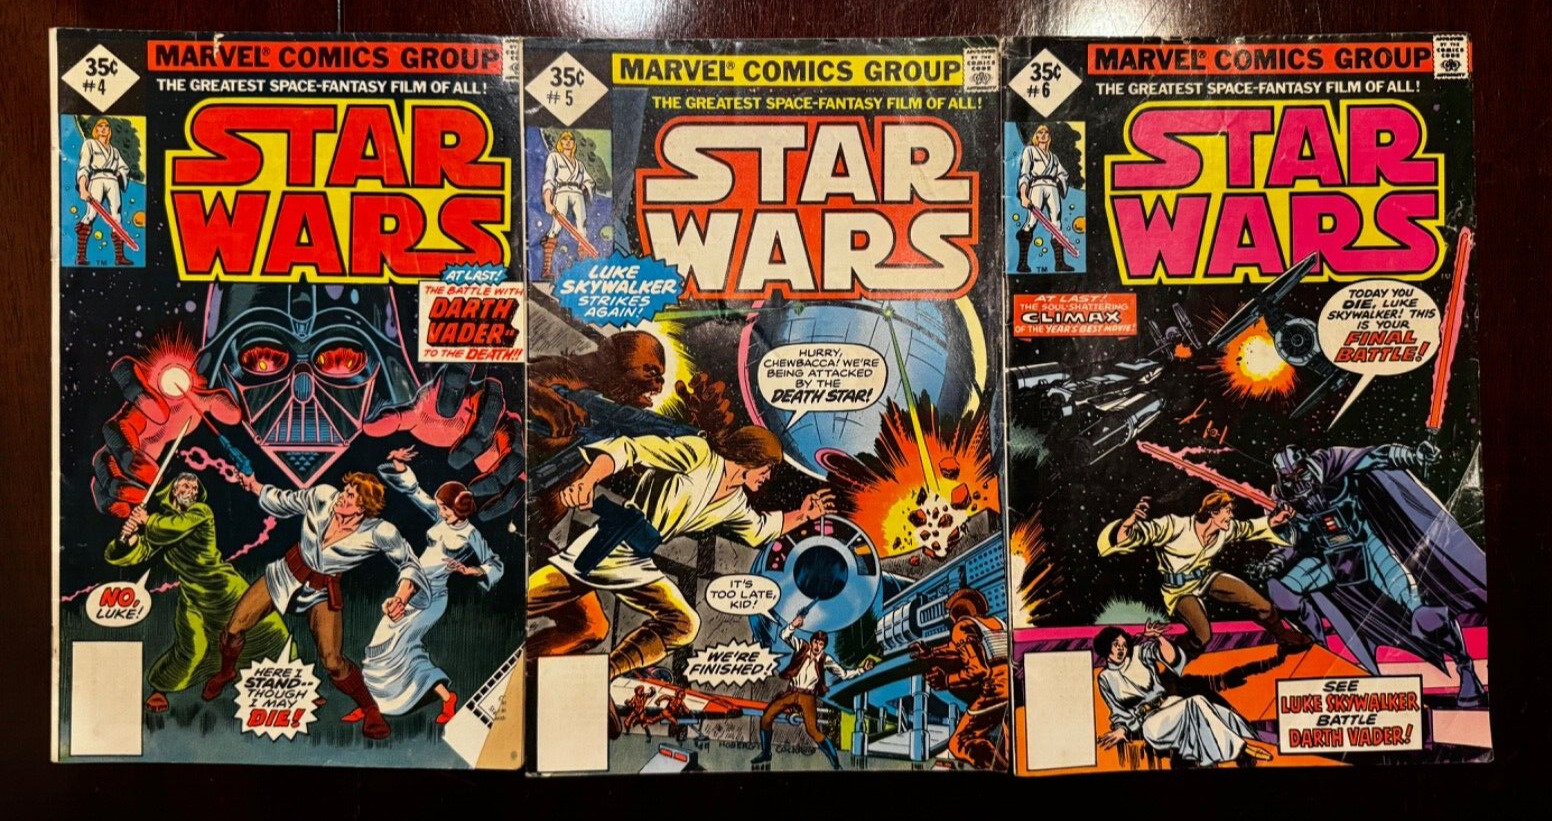 1977 Vintage Star Wars Comic Books lot of 3 - #4, #5, #6 - Marvel Comic Group